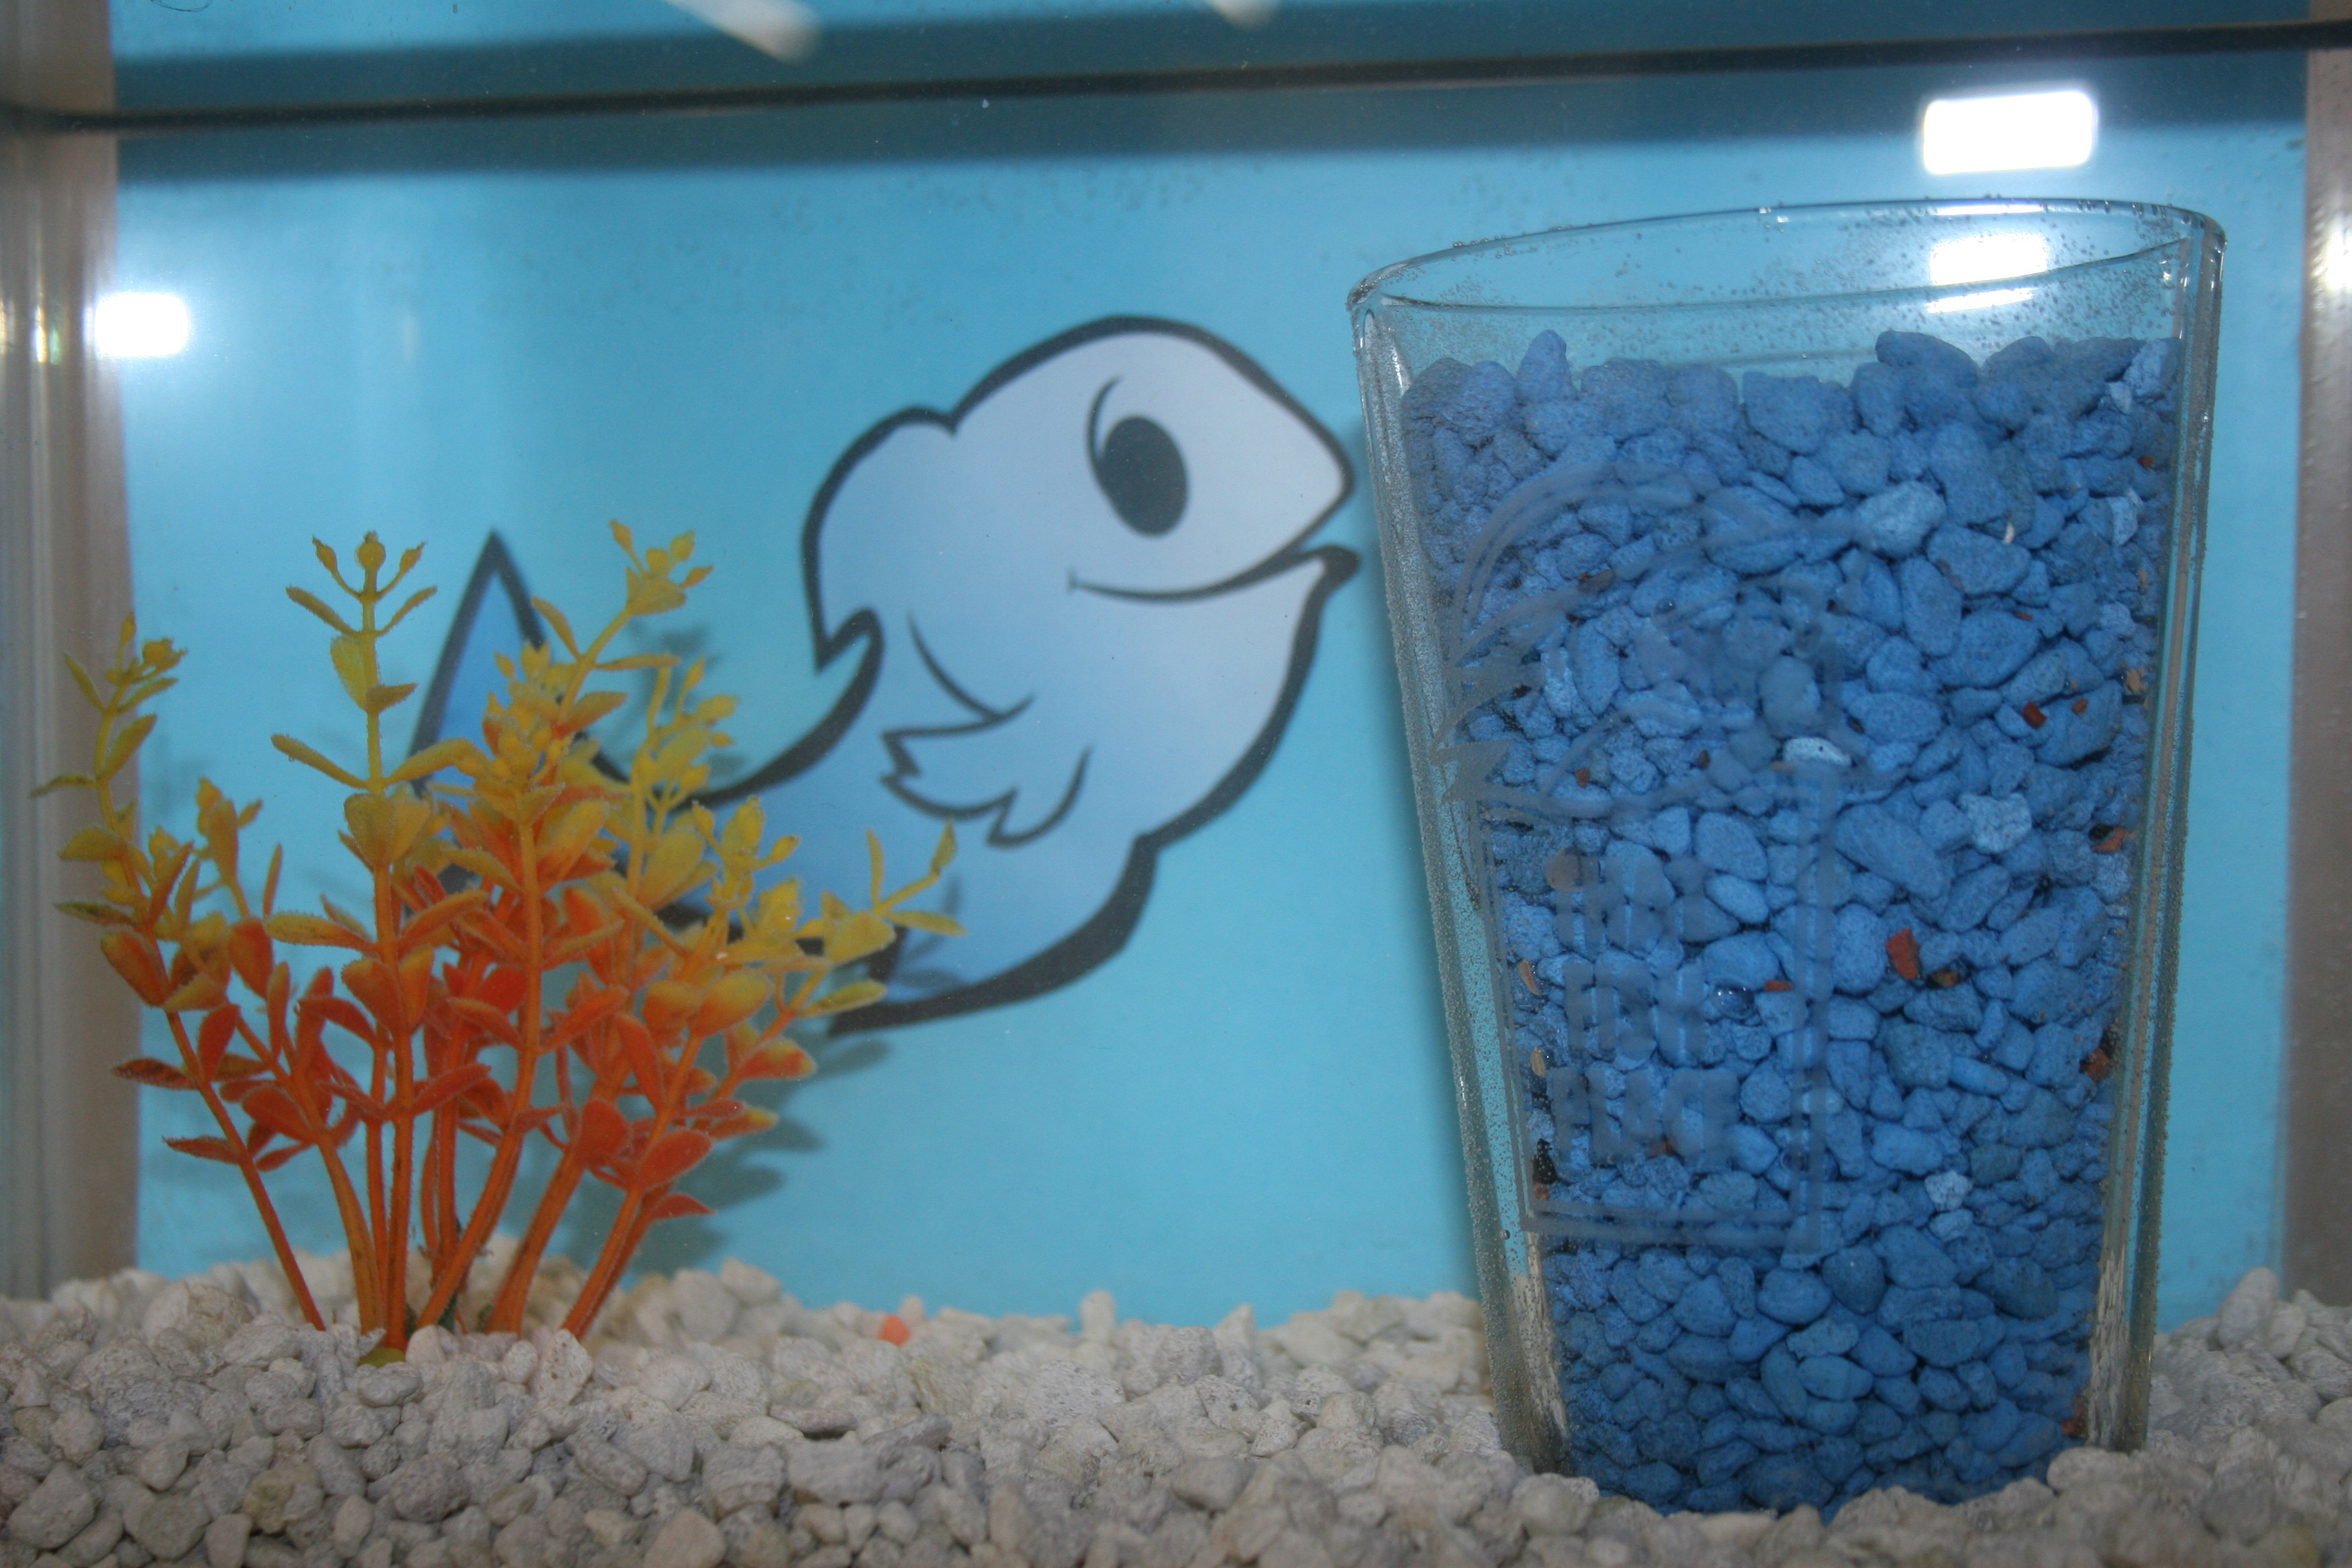 Best ideas about DIY Fish Tank Decorations
. Save or Pin Aquarium Decoration Ideas & DIY Fish Bowls Now.